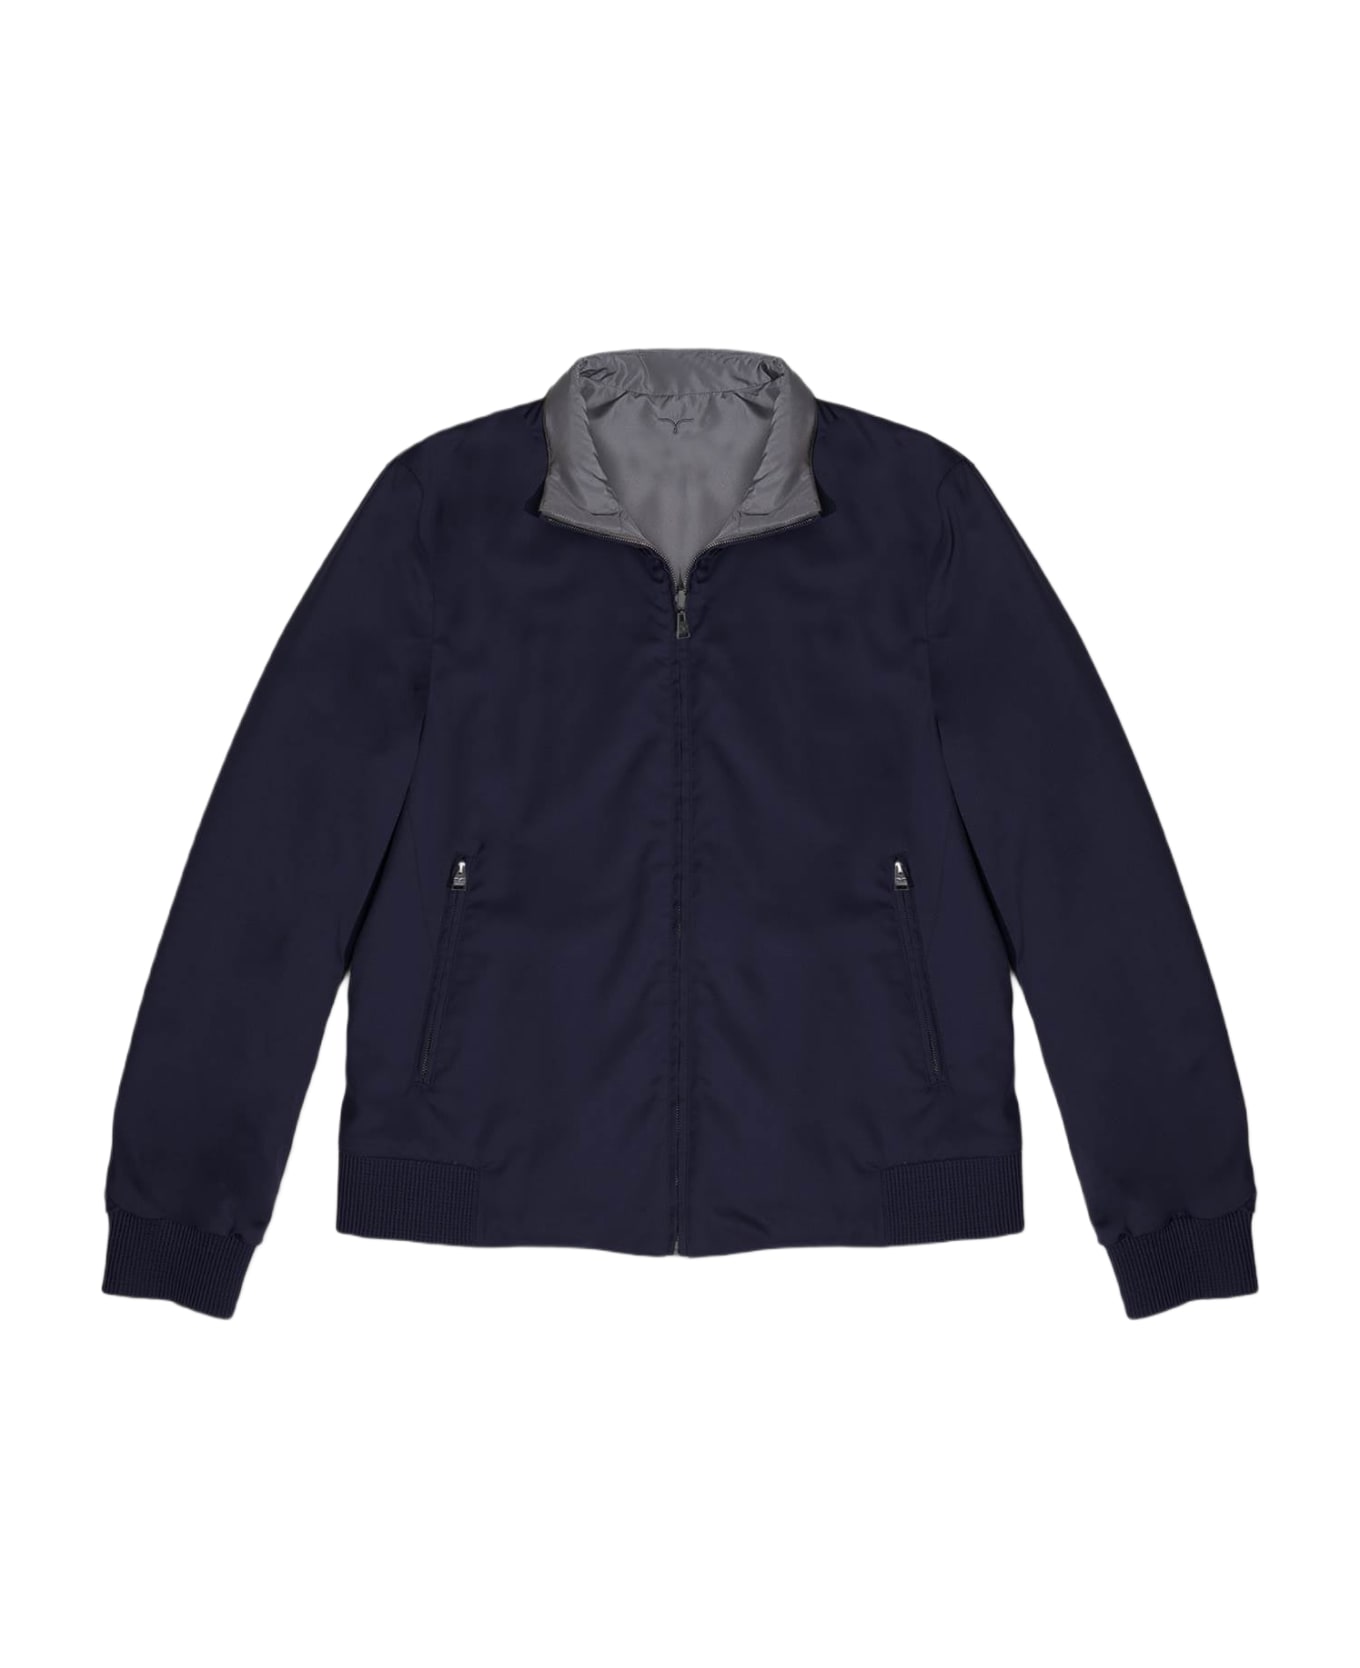 Larusmiani Reversible Wool Jacket Jacket - Navy